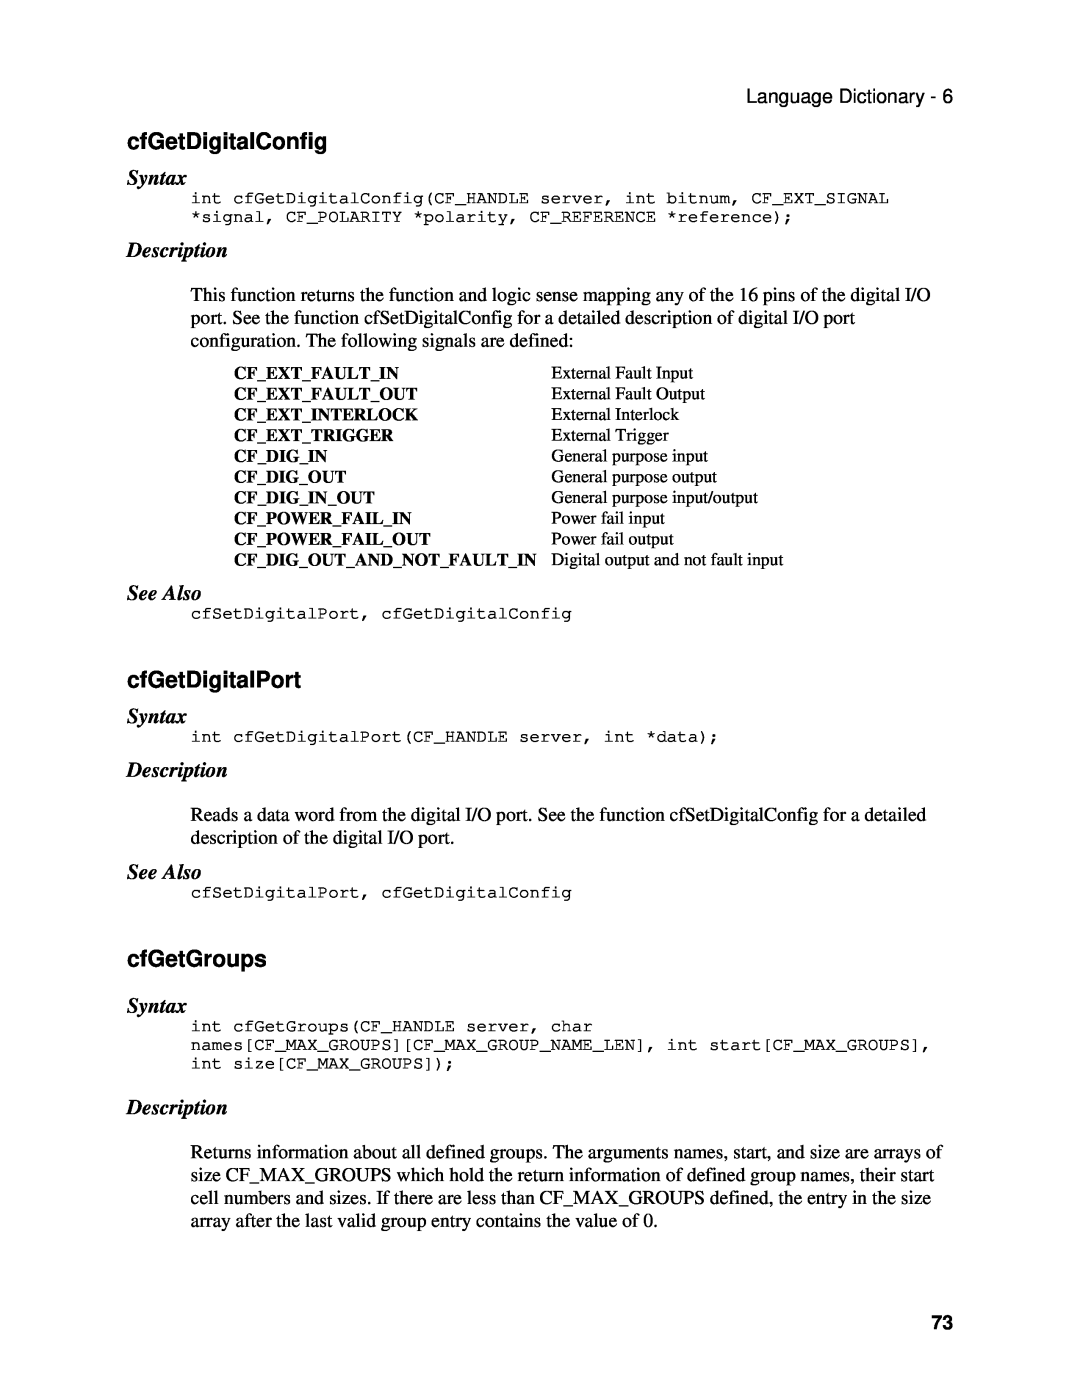 Agilent Technologies E4371A, E4370A manual cfGetDigitalConfig, cfGetDigitalPort, cfGetGroups, See Also, Syntax, Description 